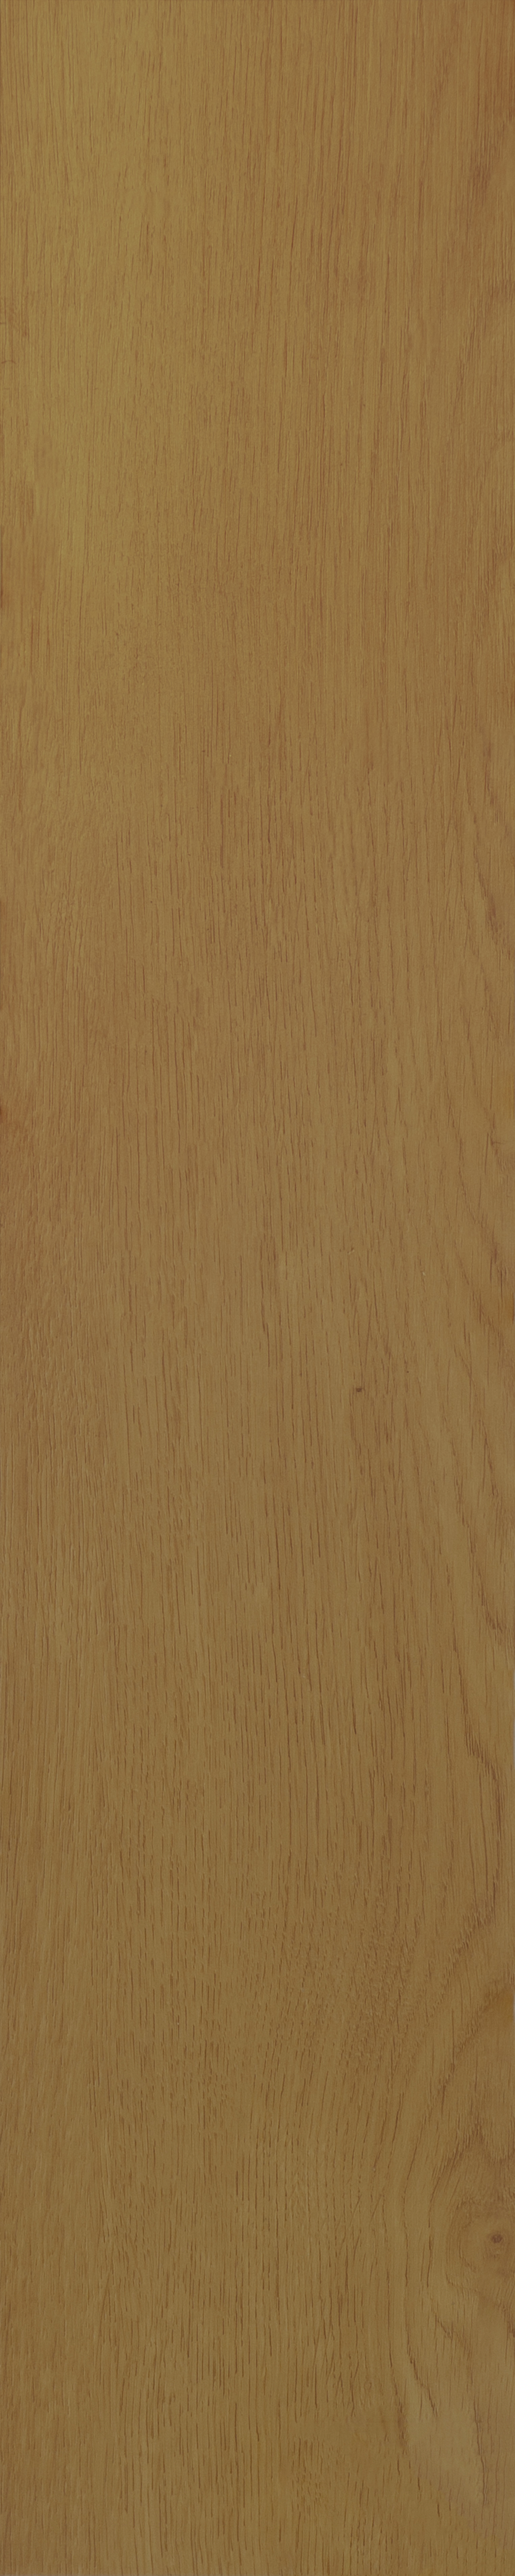 Golden Luxury Wood Herringbone product_other2_image